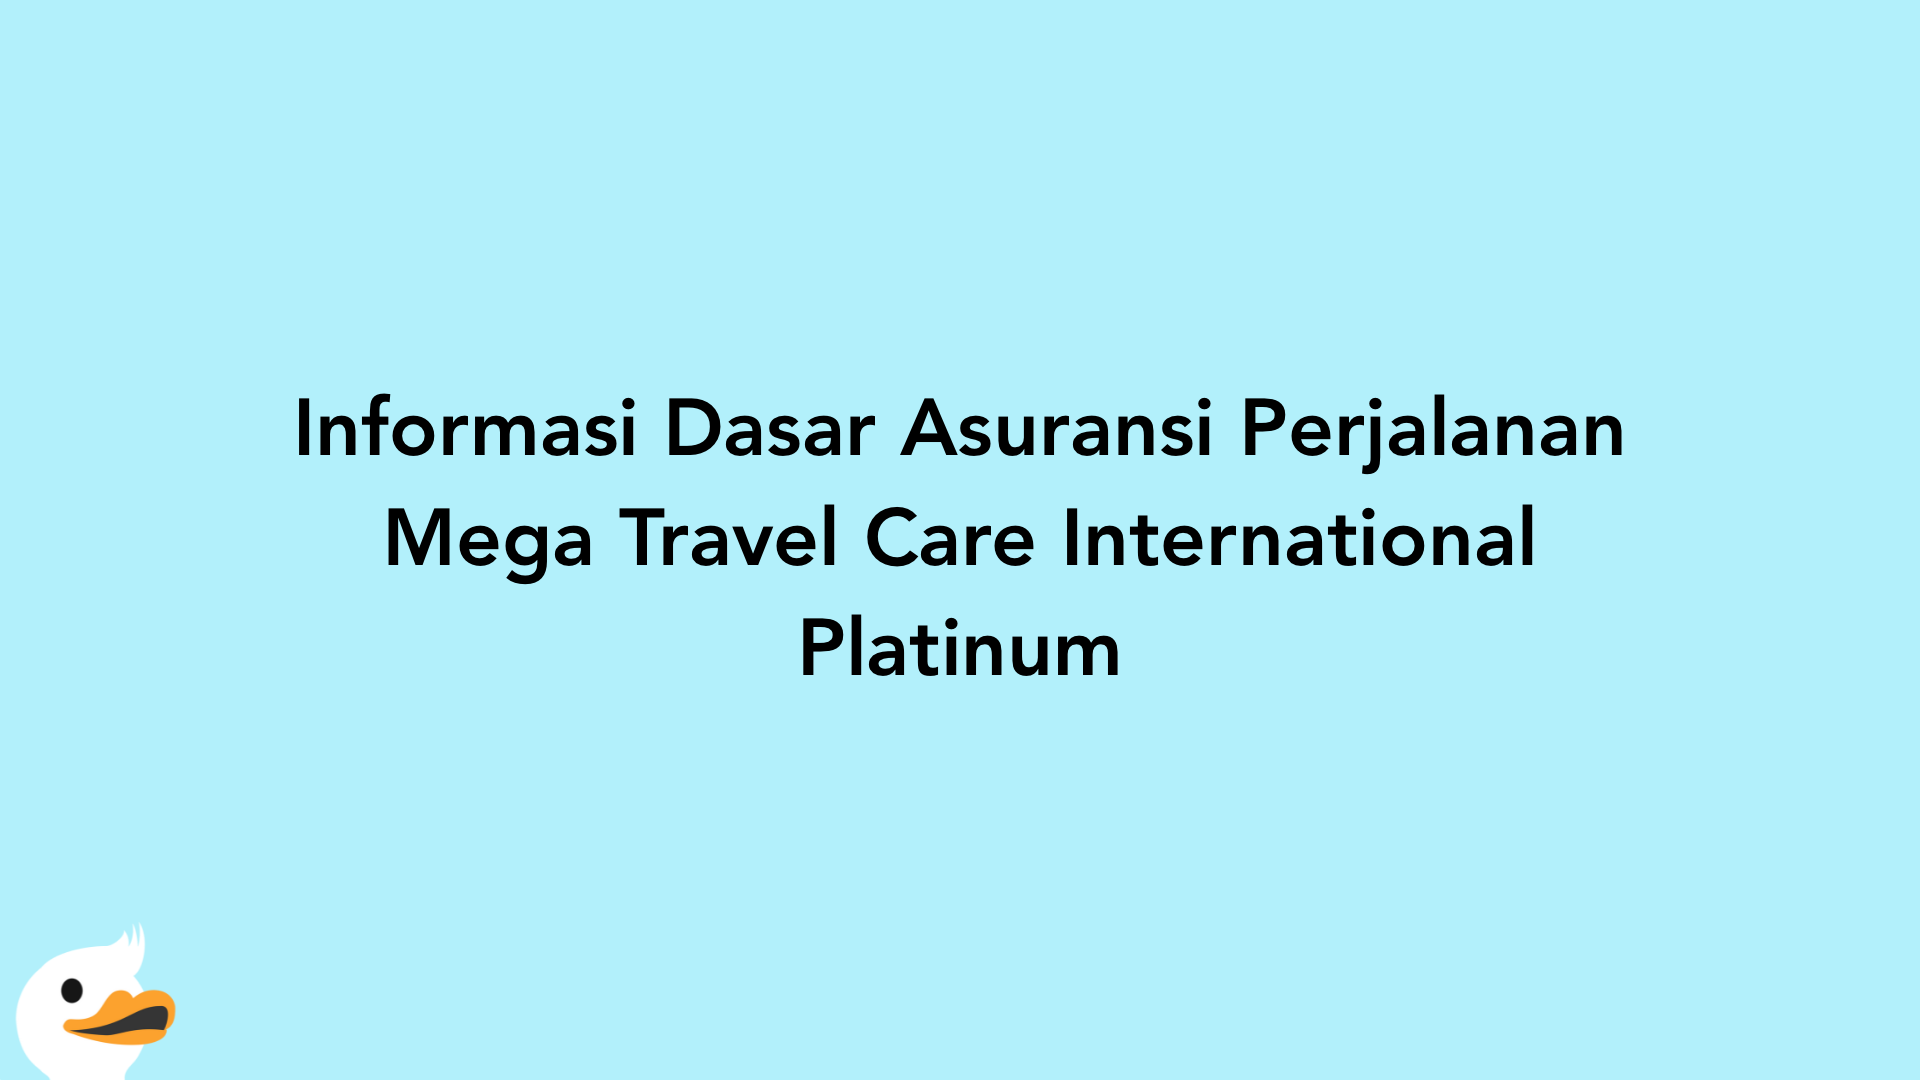 Informasi Dasar Asuransi Perjalanan Mega Travel Care International Platinum